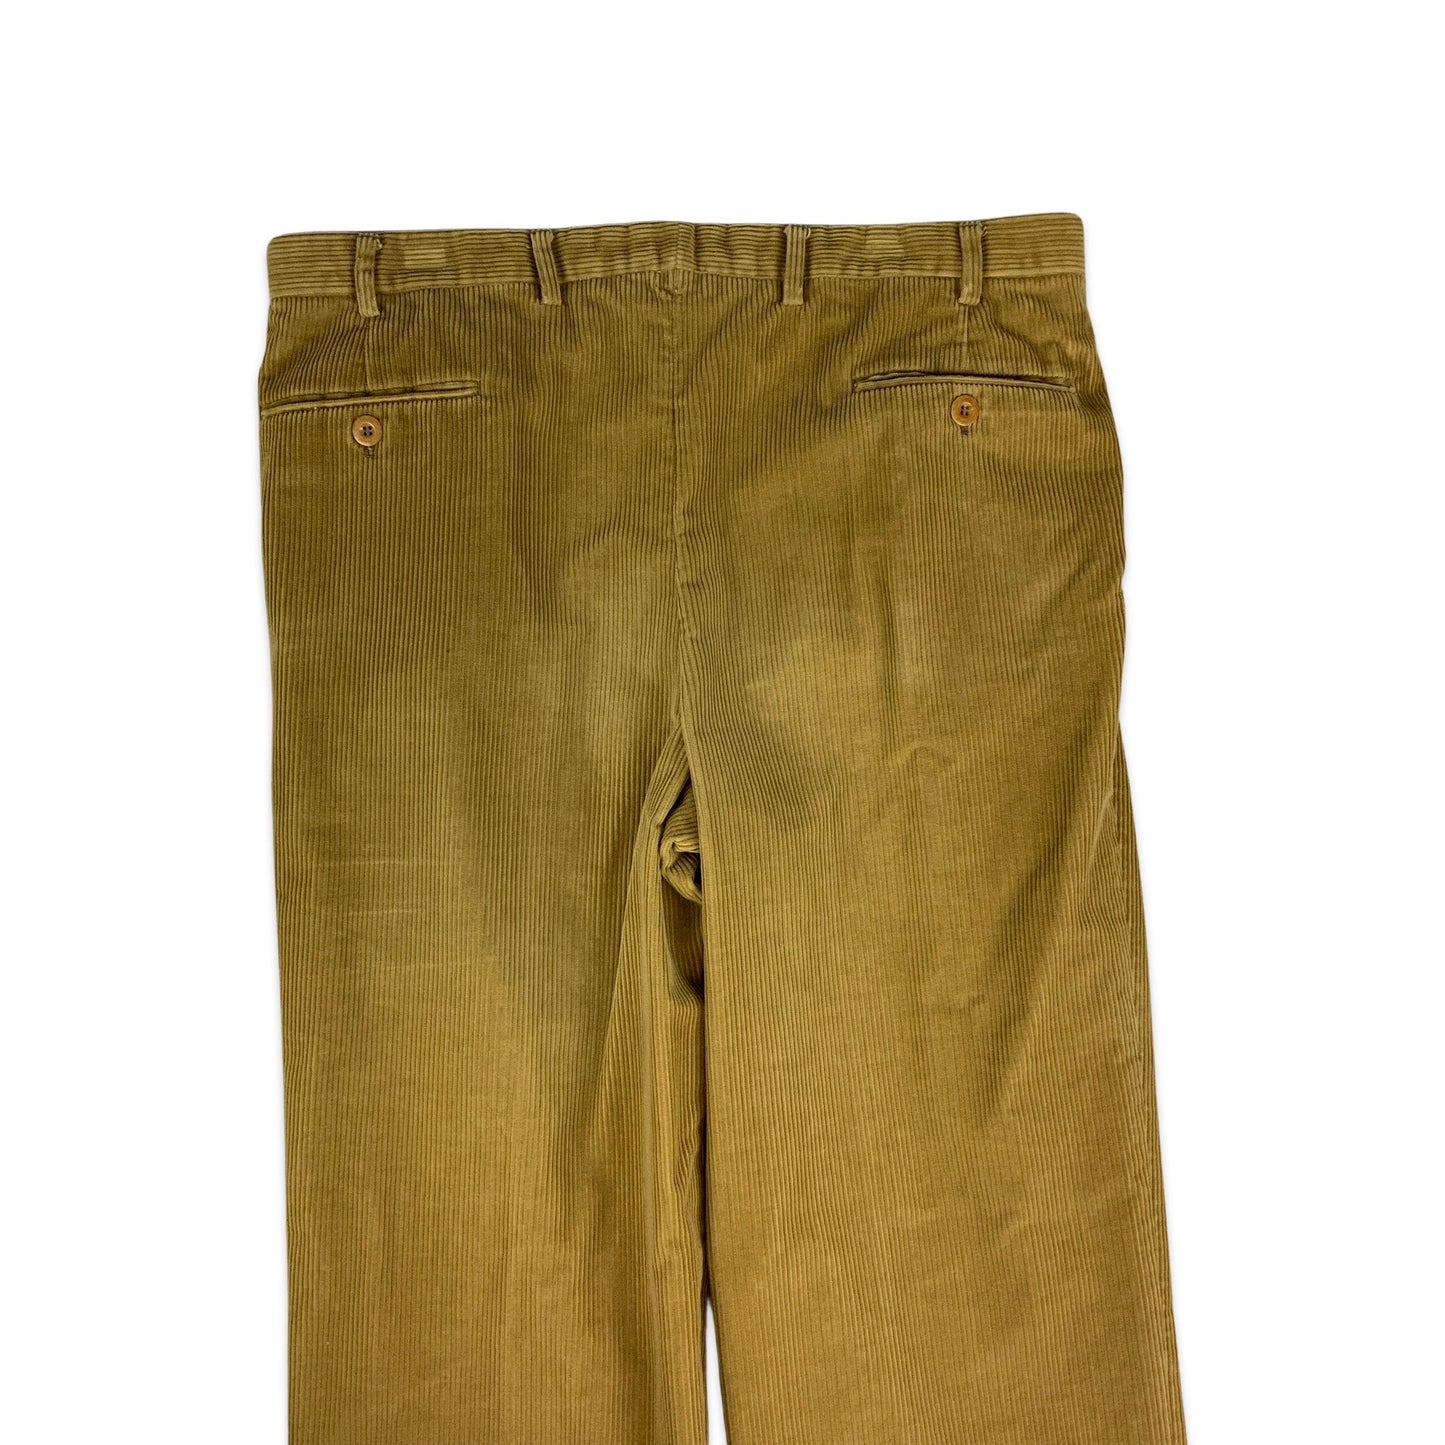 Vintage Beige Pleated Corduroy Trousers 37W 28L